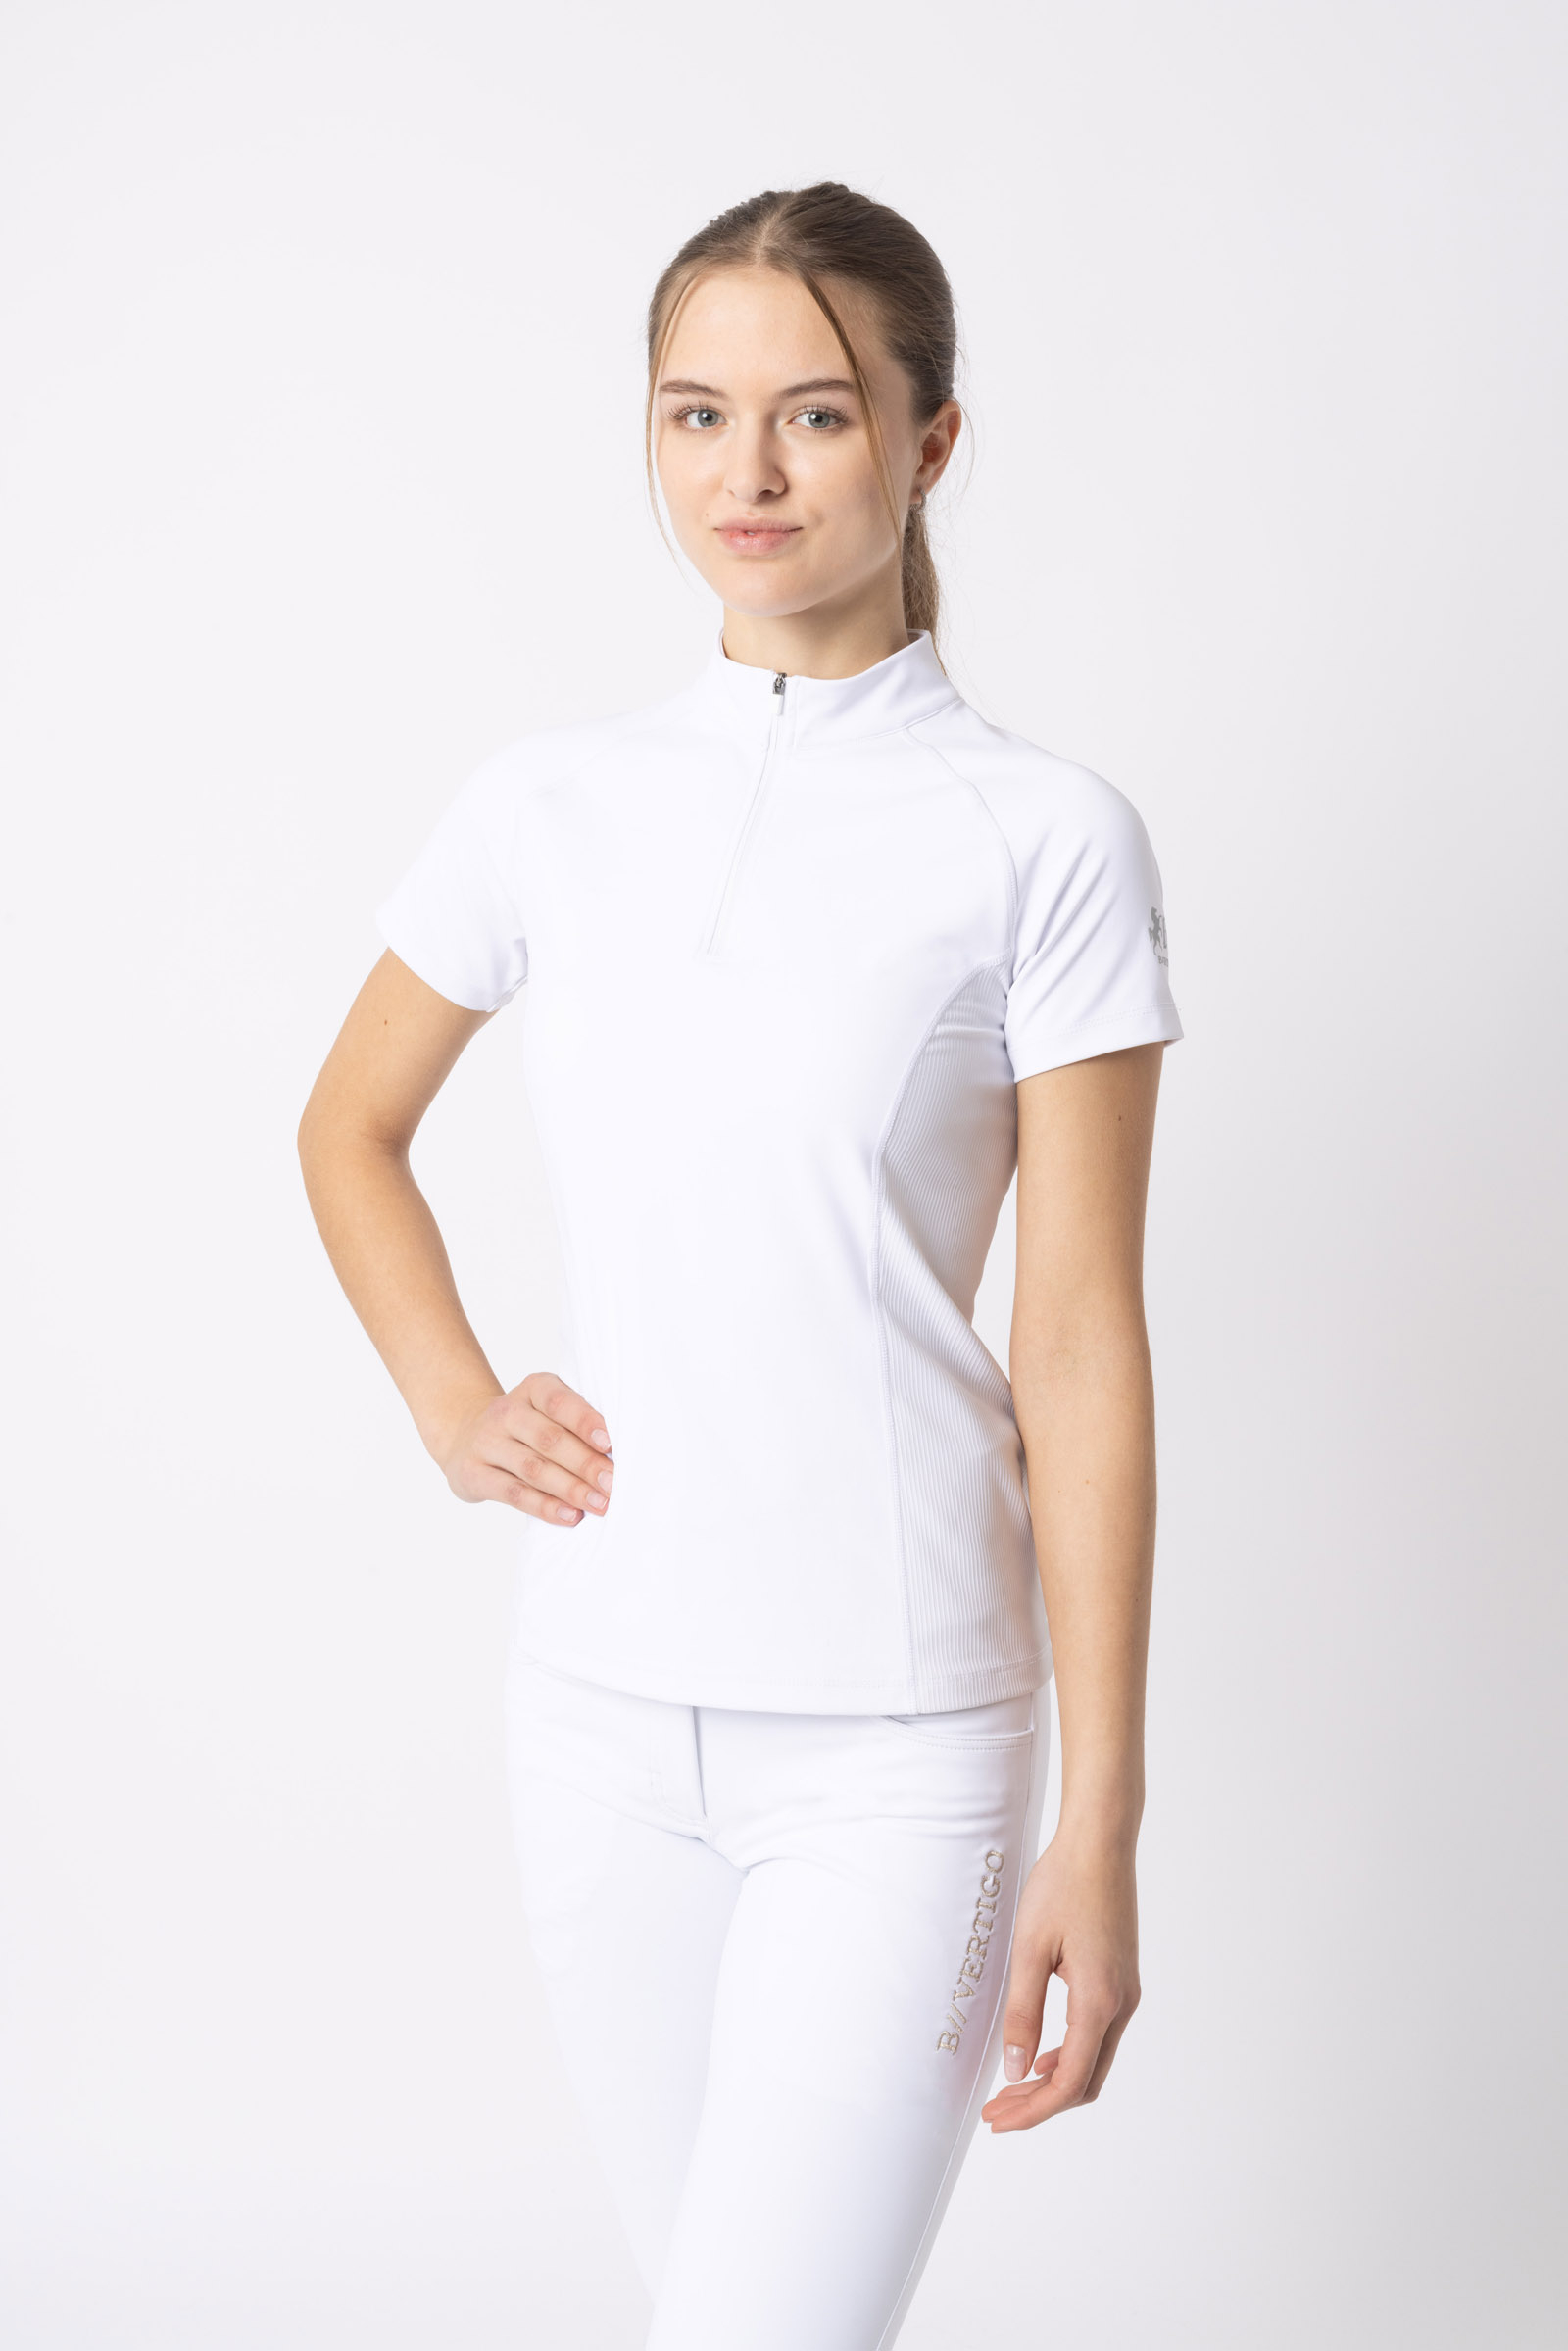 Ariat Ascent Women's 1/4 Zip Competition Shirt